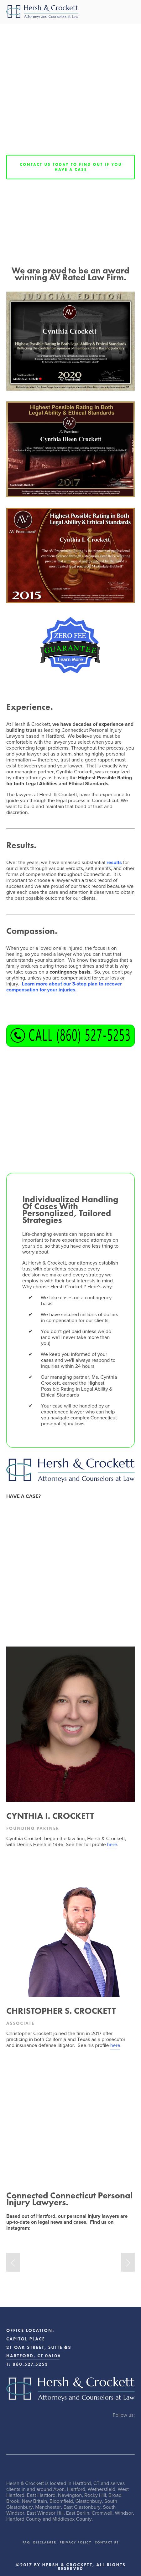 Hersh & Crockett - Hartford CT Lawyers